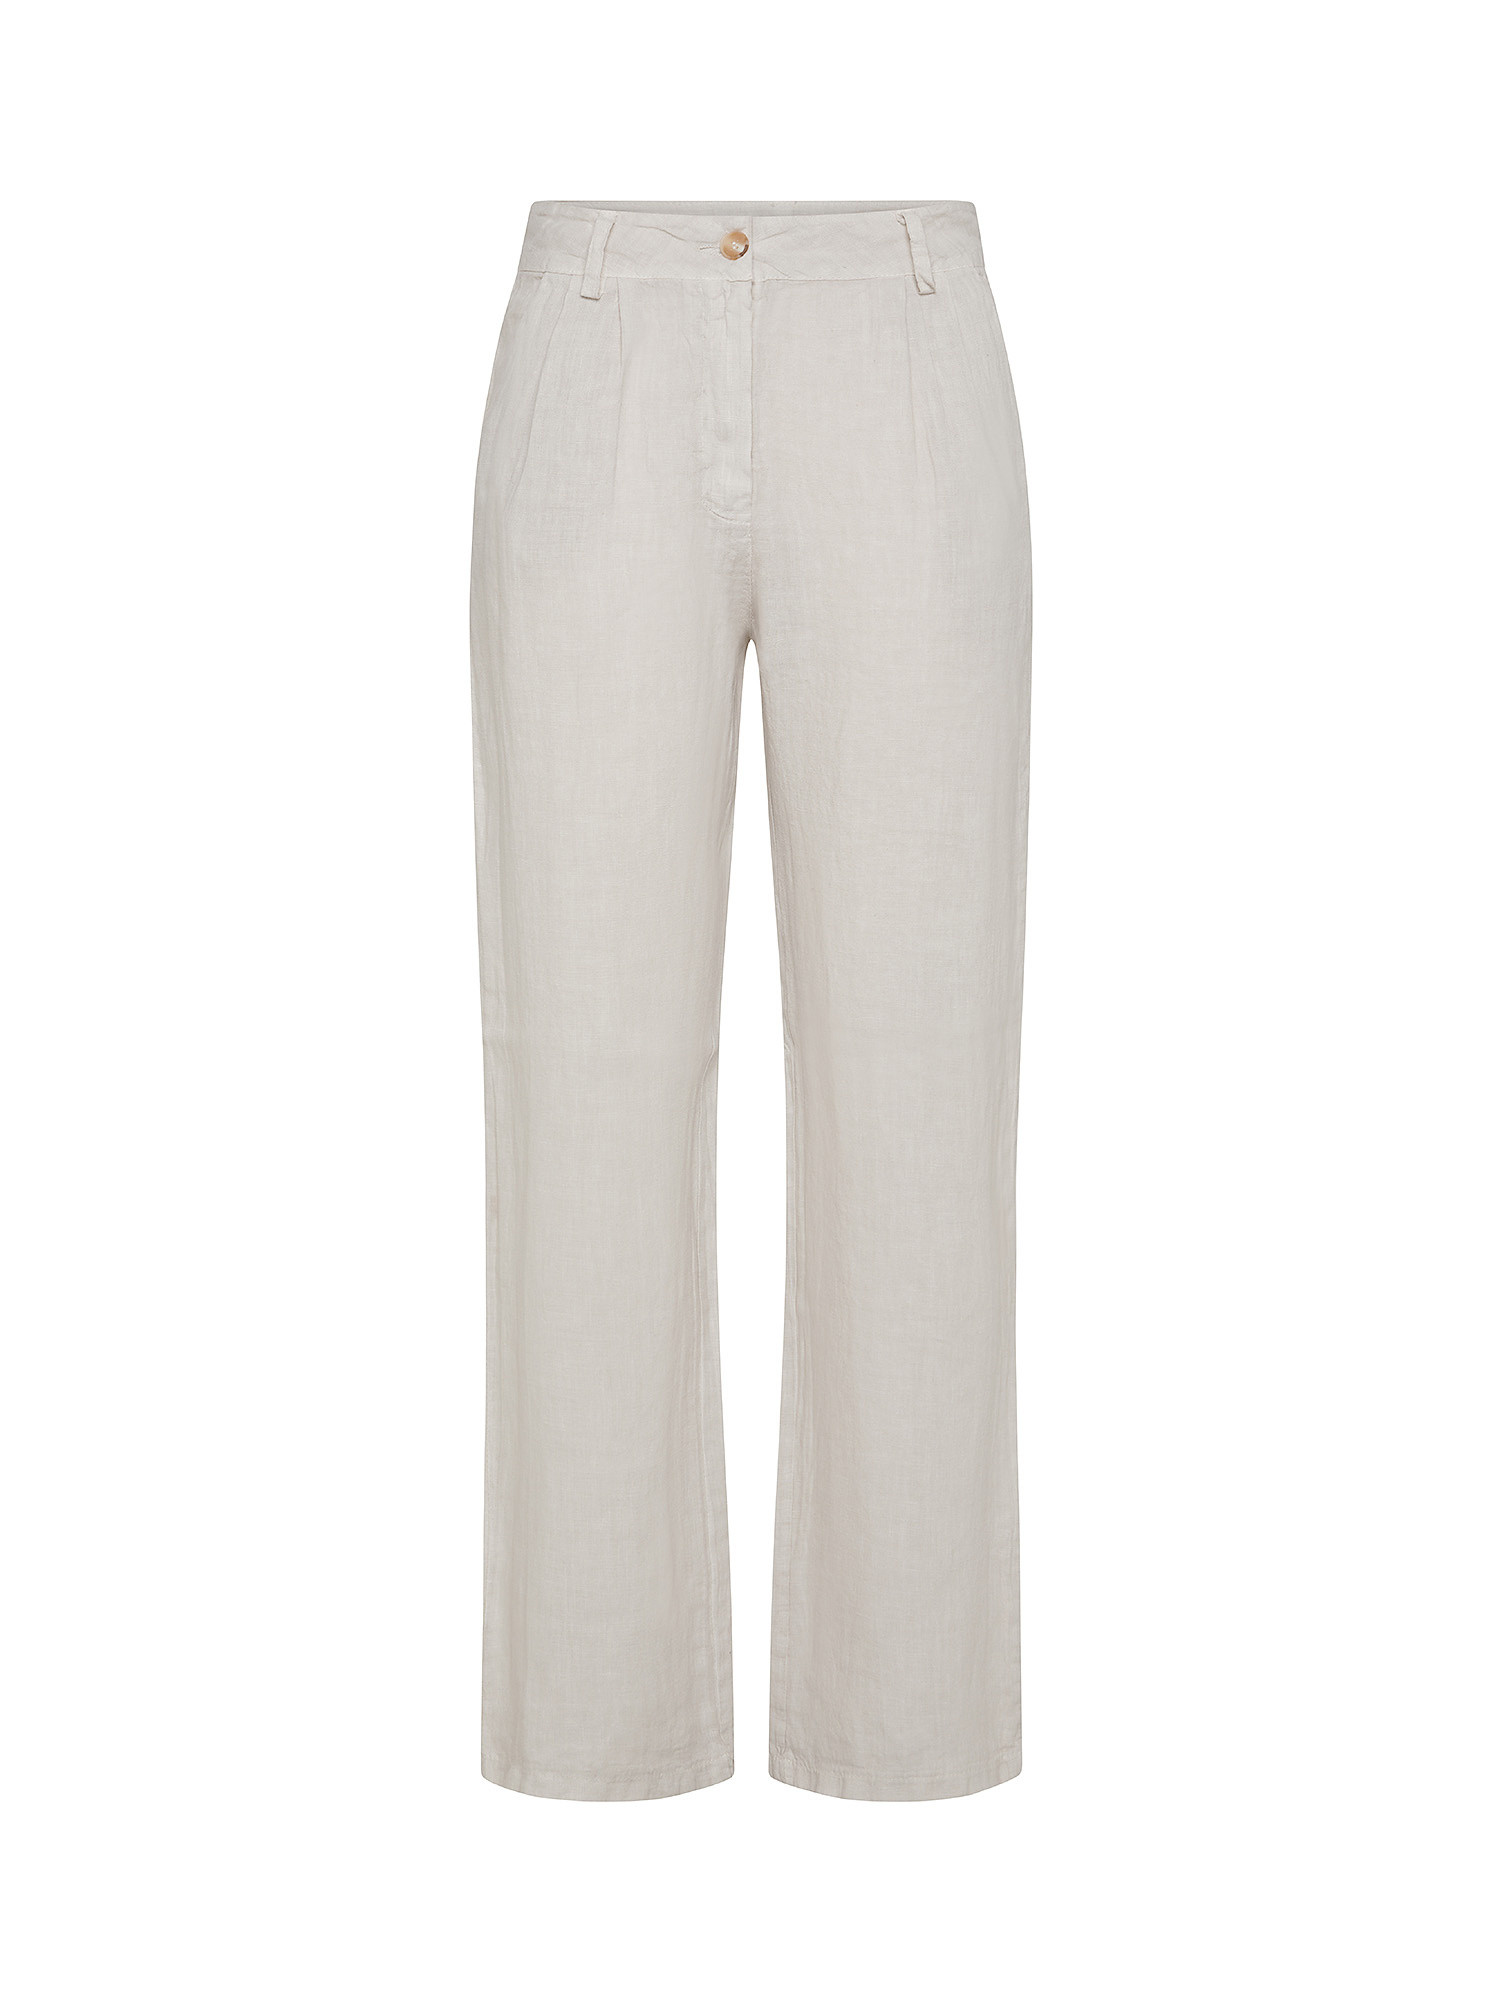 Koan - Pantaloni in lino con pinces, Beige, large image number 0